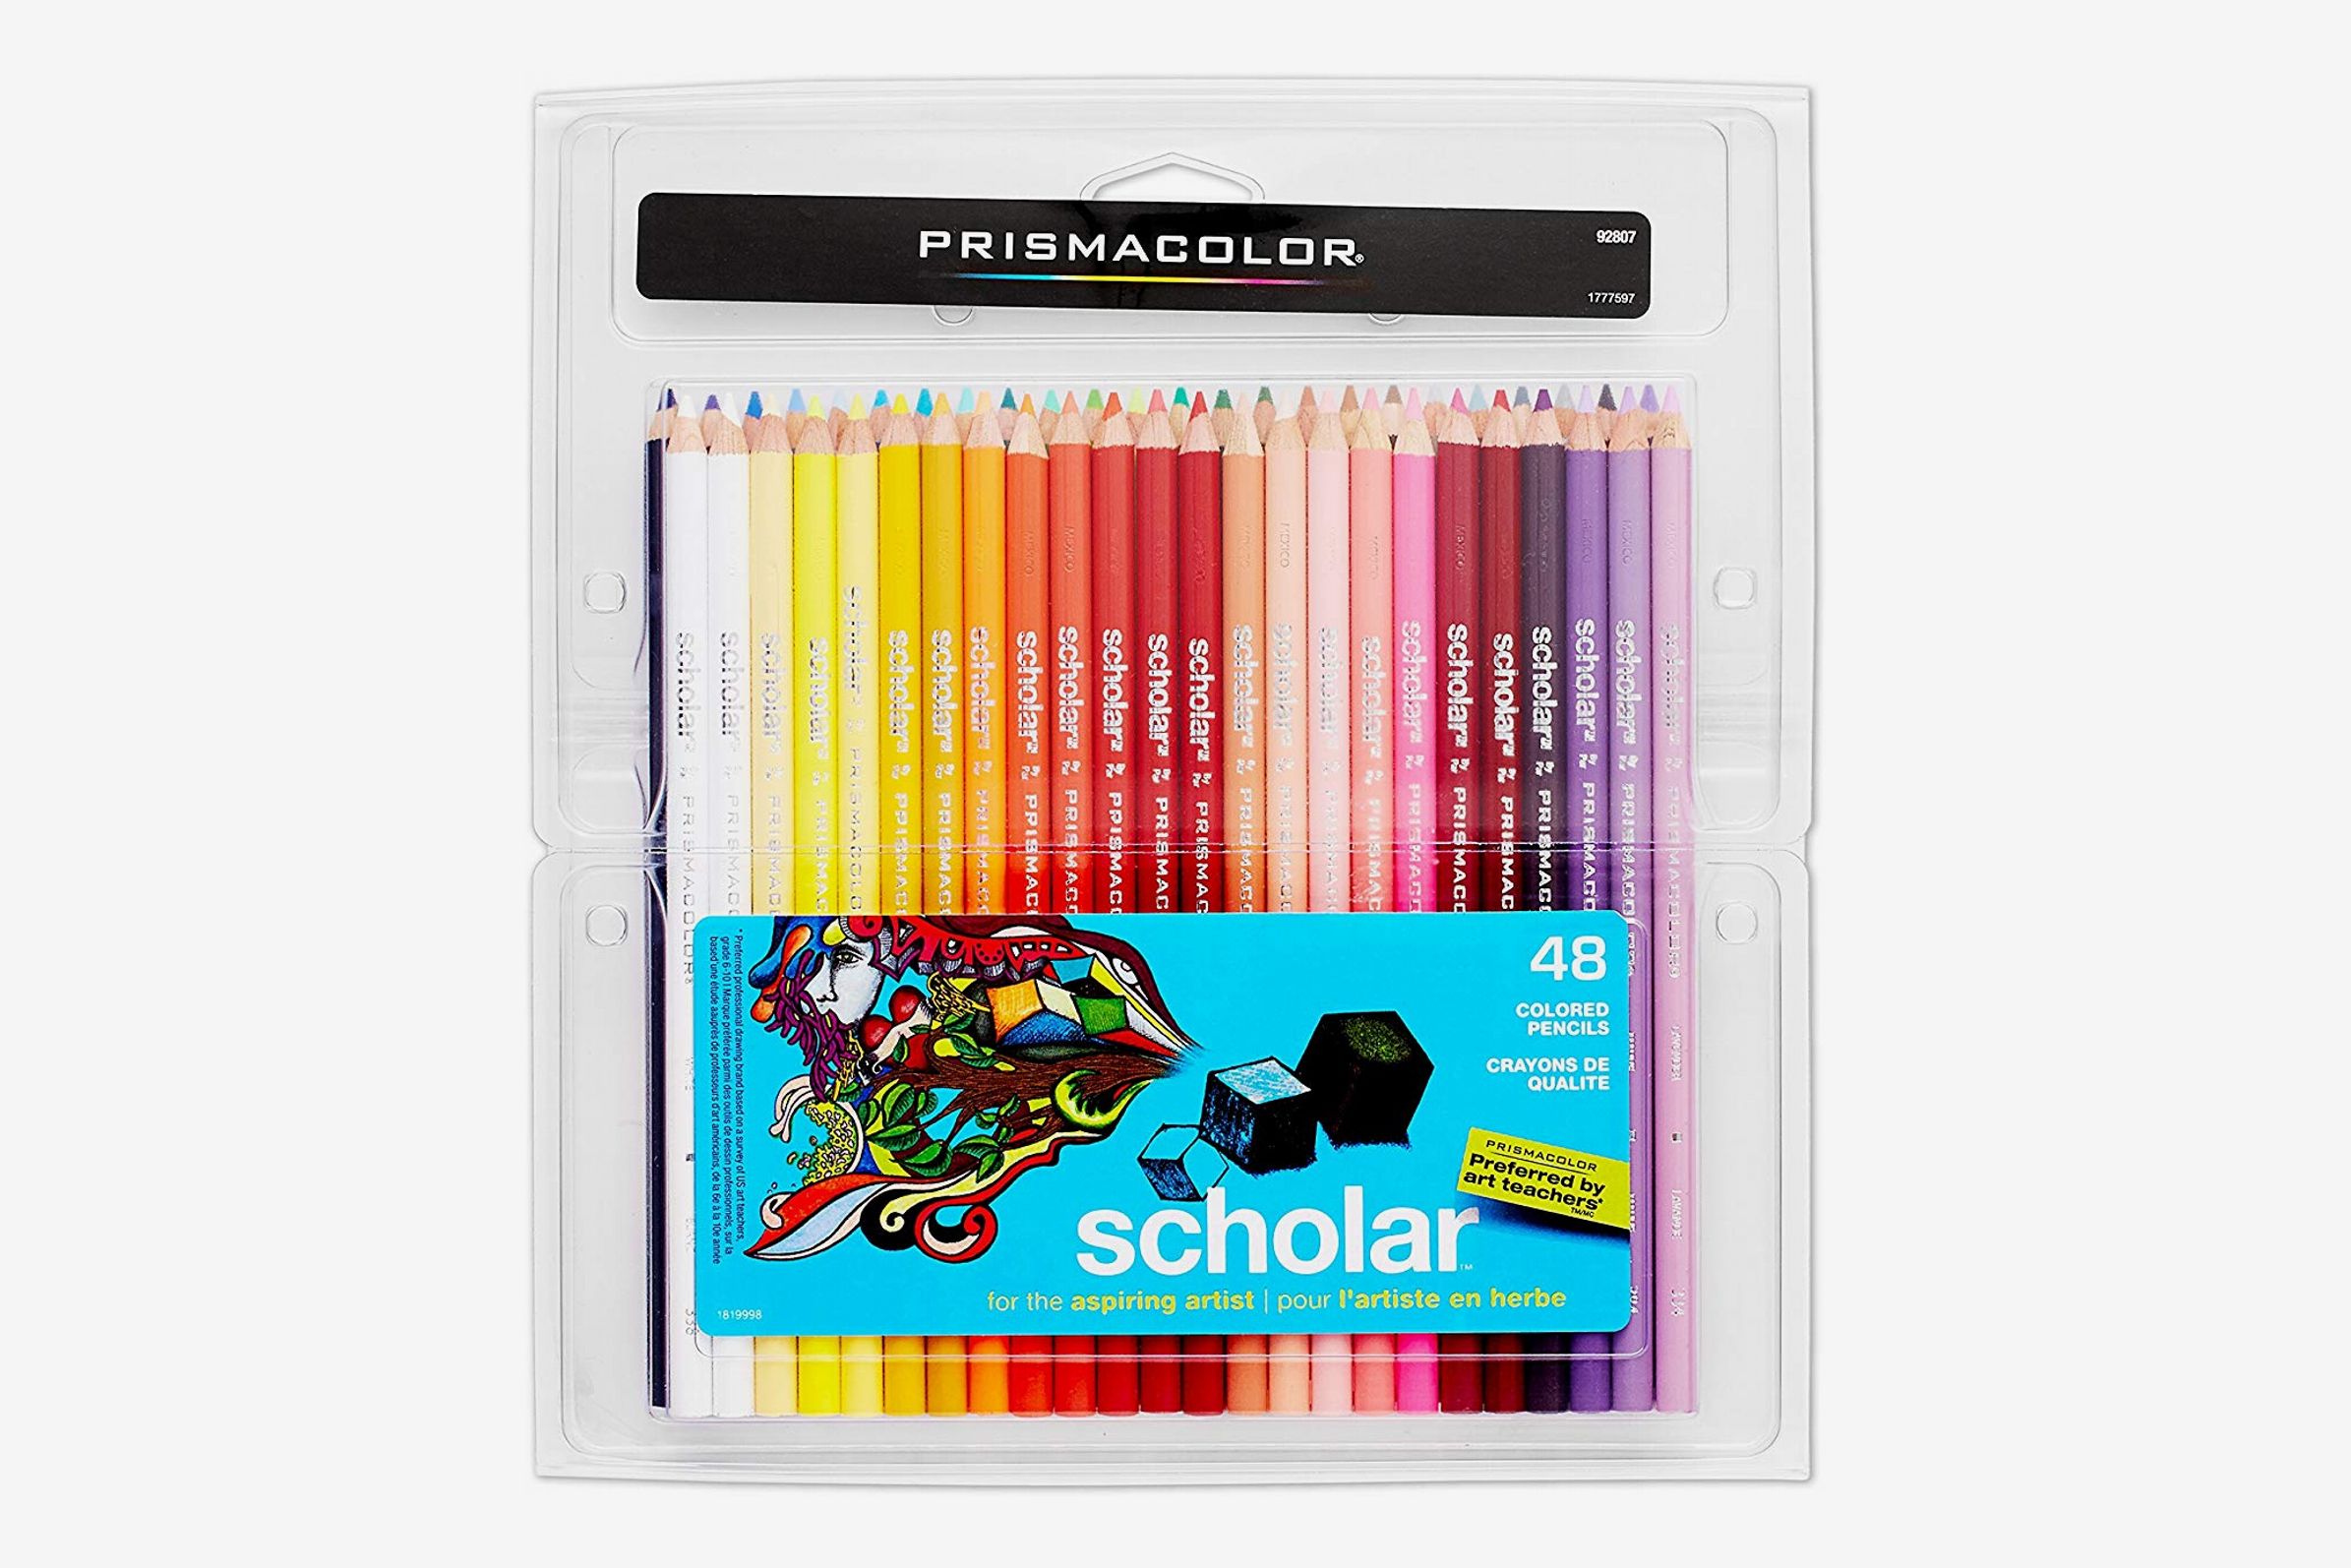 Prismacolor Scholar Art Pencils Box of 12 and Pencil Sharpener Bundle